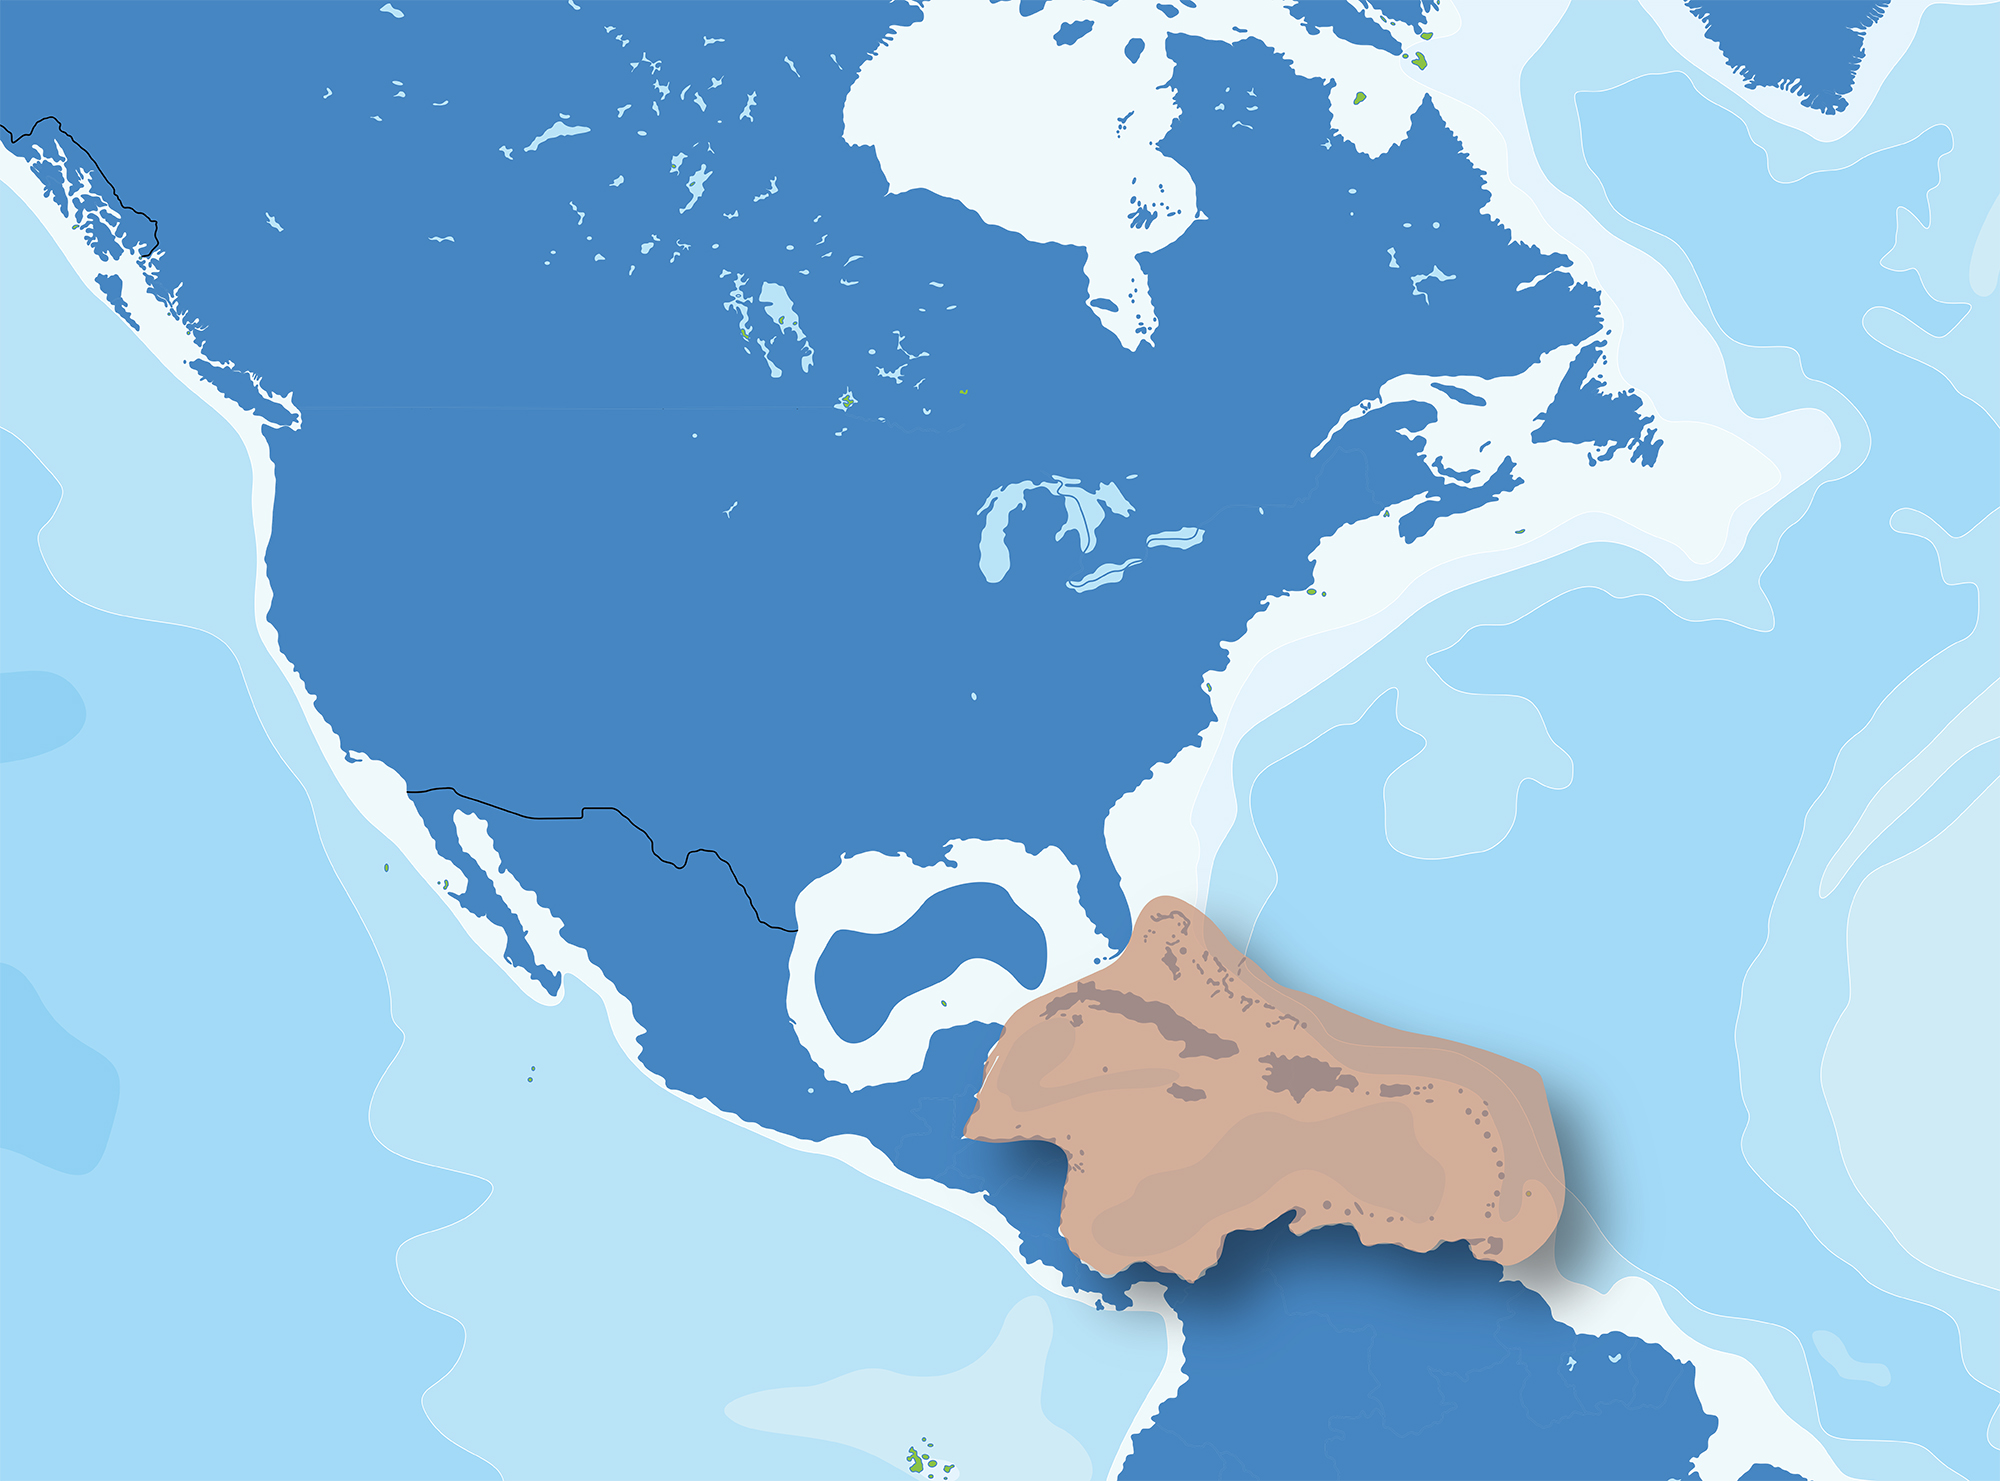 Caribbean region map